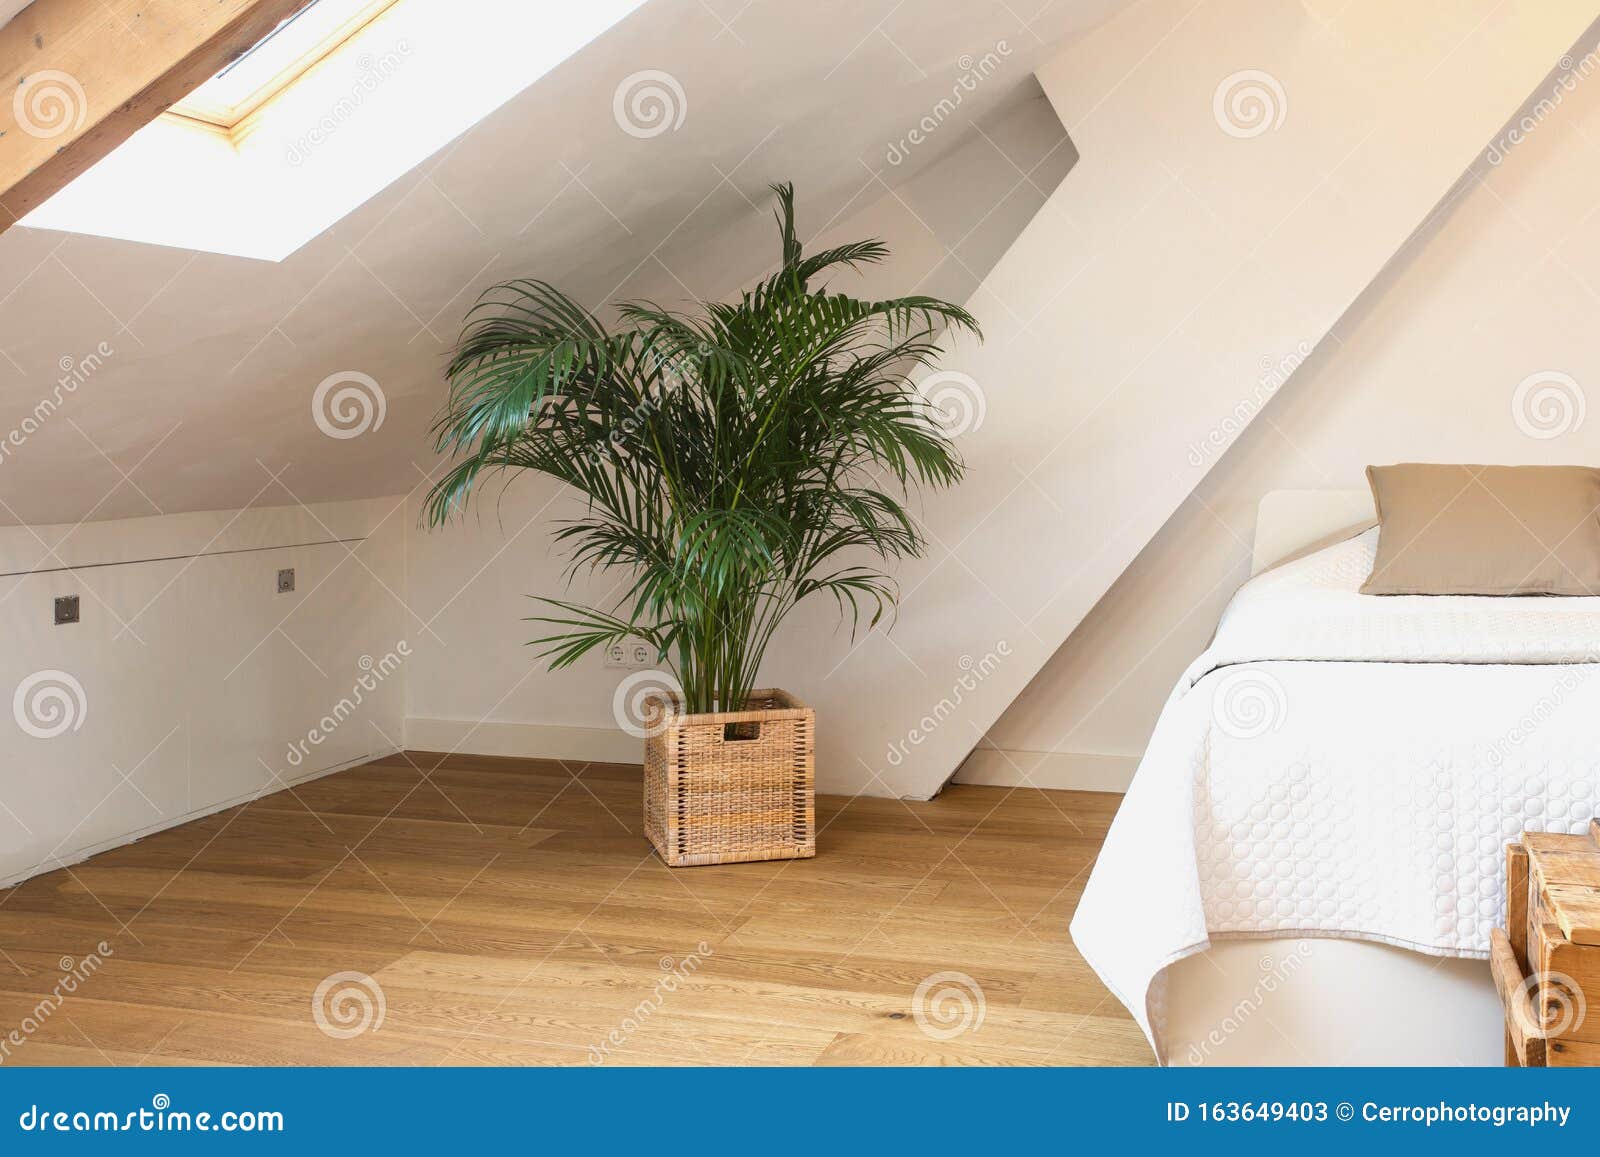 Green Plant In Basket In Modern Light Bedroom White Walls And Wooden Floor Modern Design Close Up Stock Image Image Of Blanket Hotel 163649403